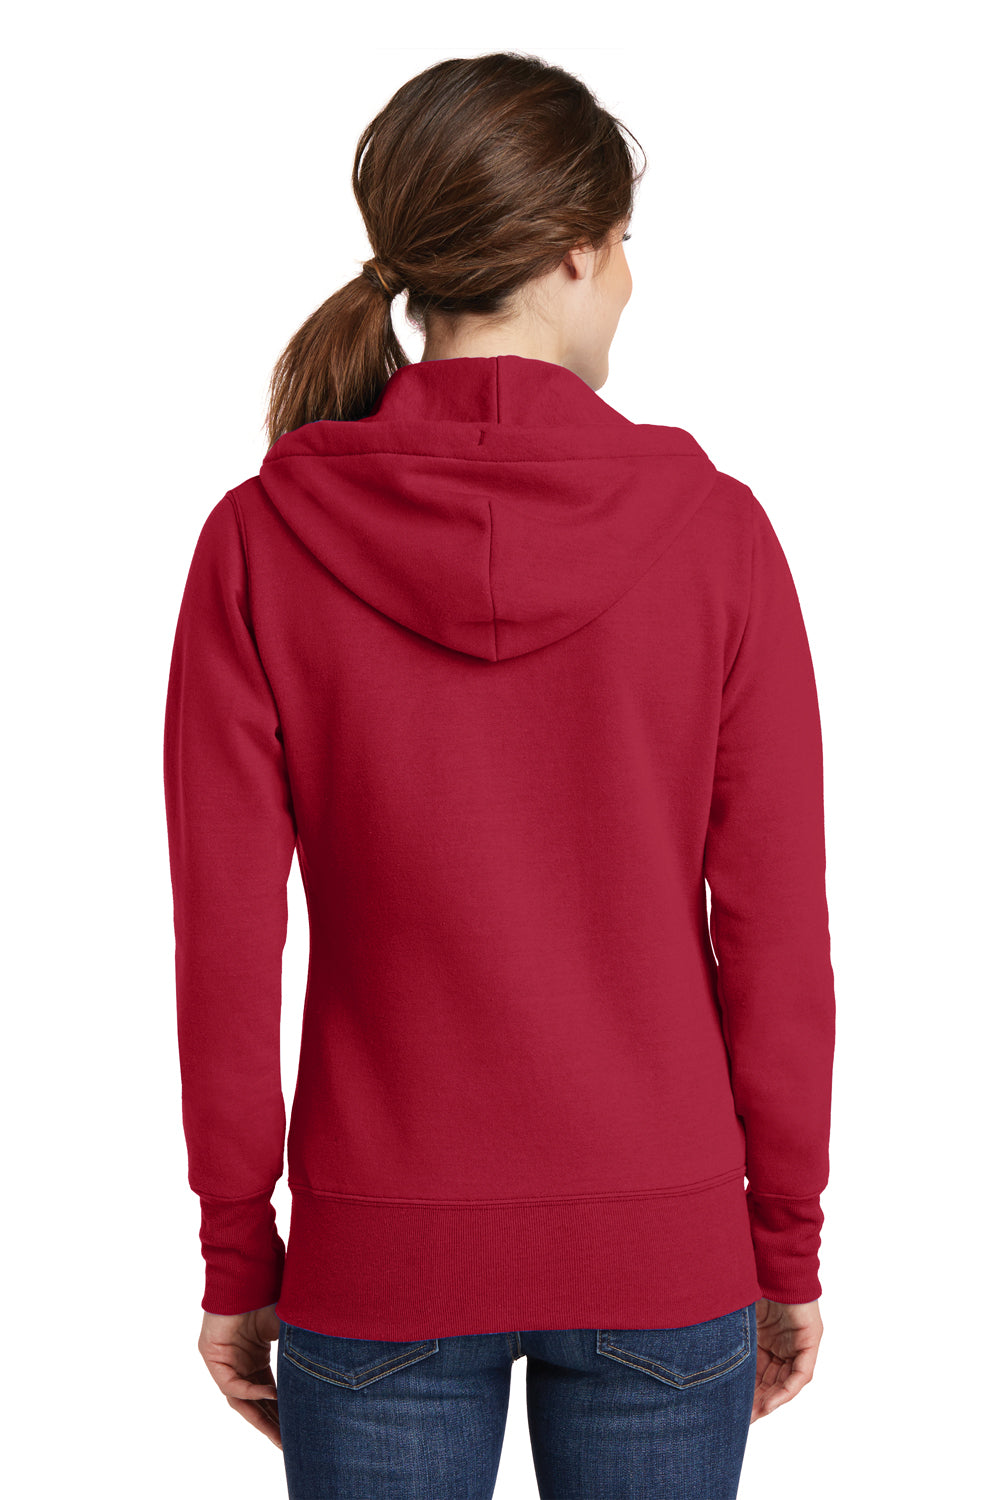 Port & Company LPC78ZH Womens Core Fleece Full Zip Hooded Sweatshirt Hoodie Red Back